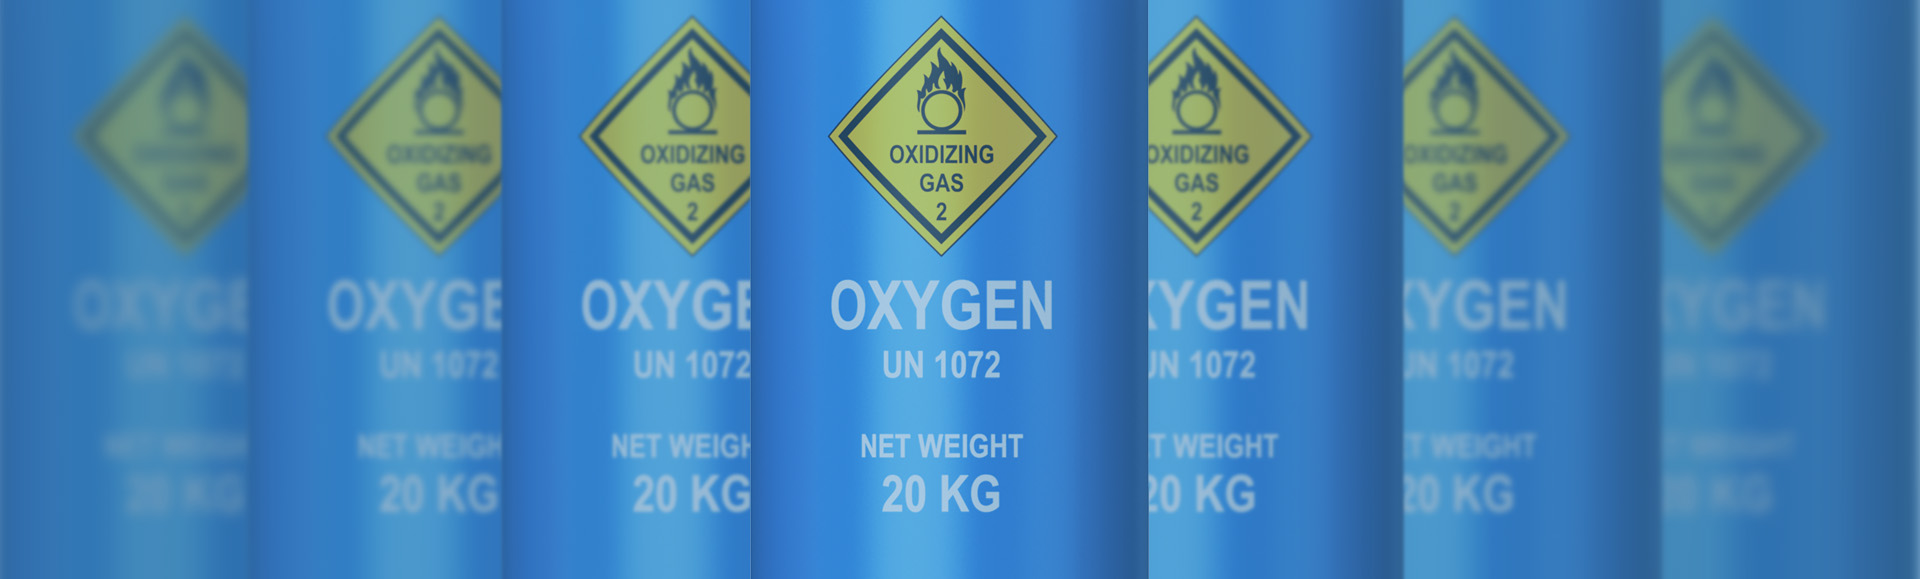 IMG - Buy Oxygen Gas Seychelles